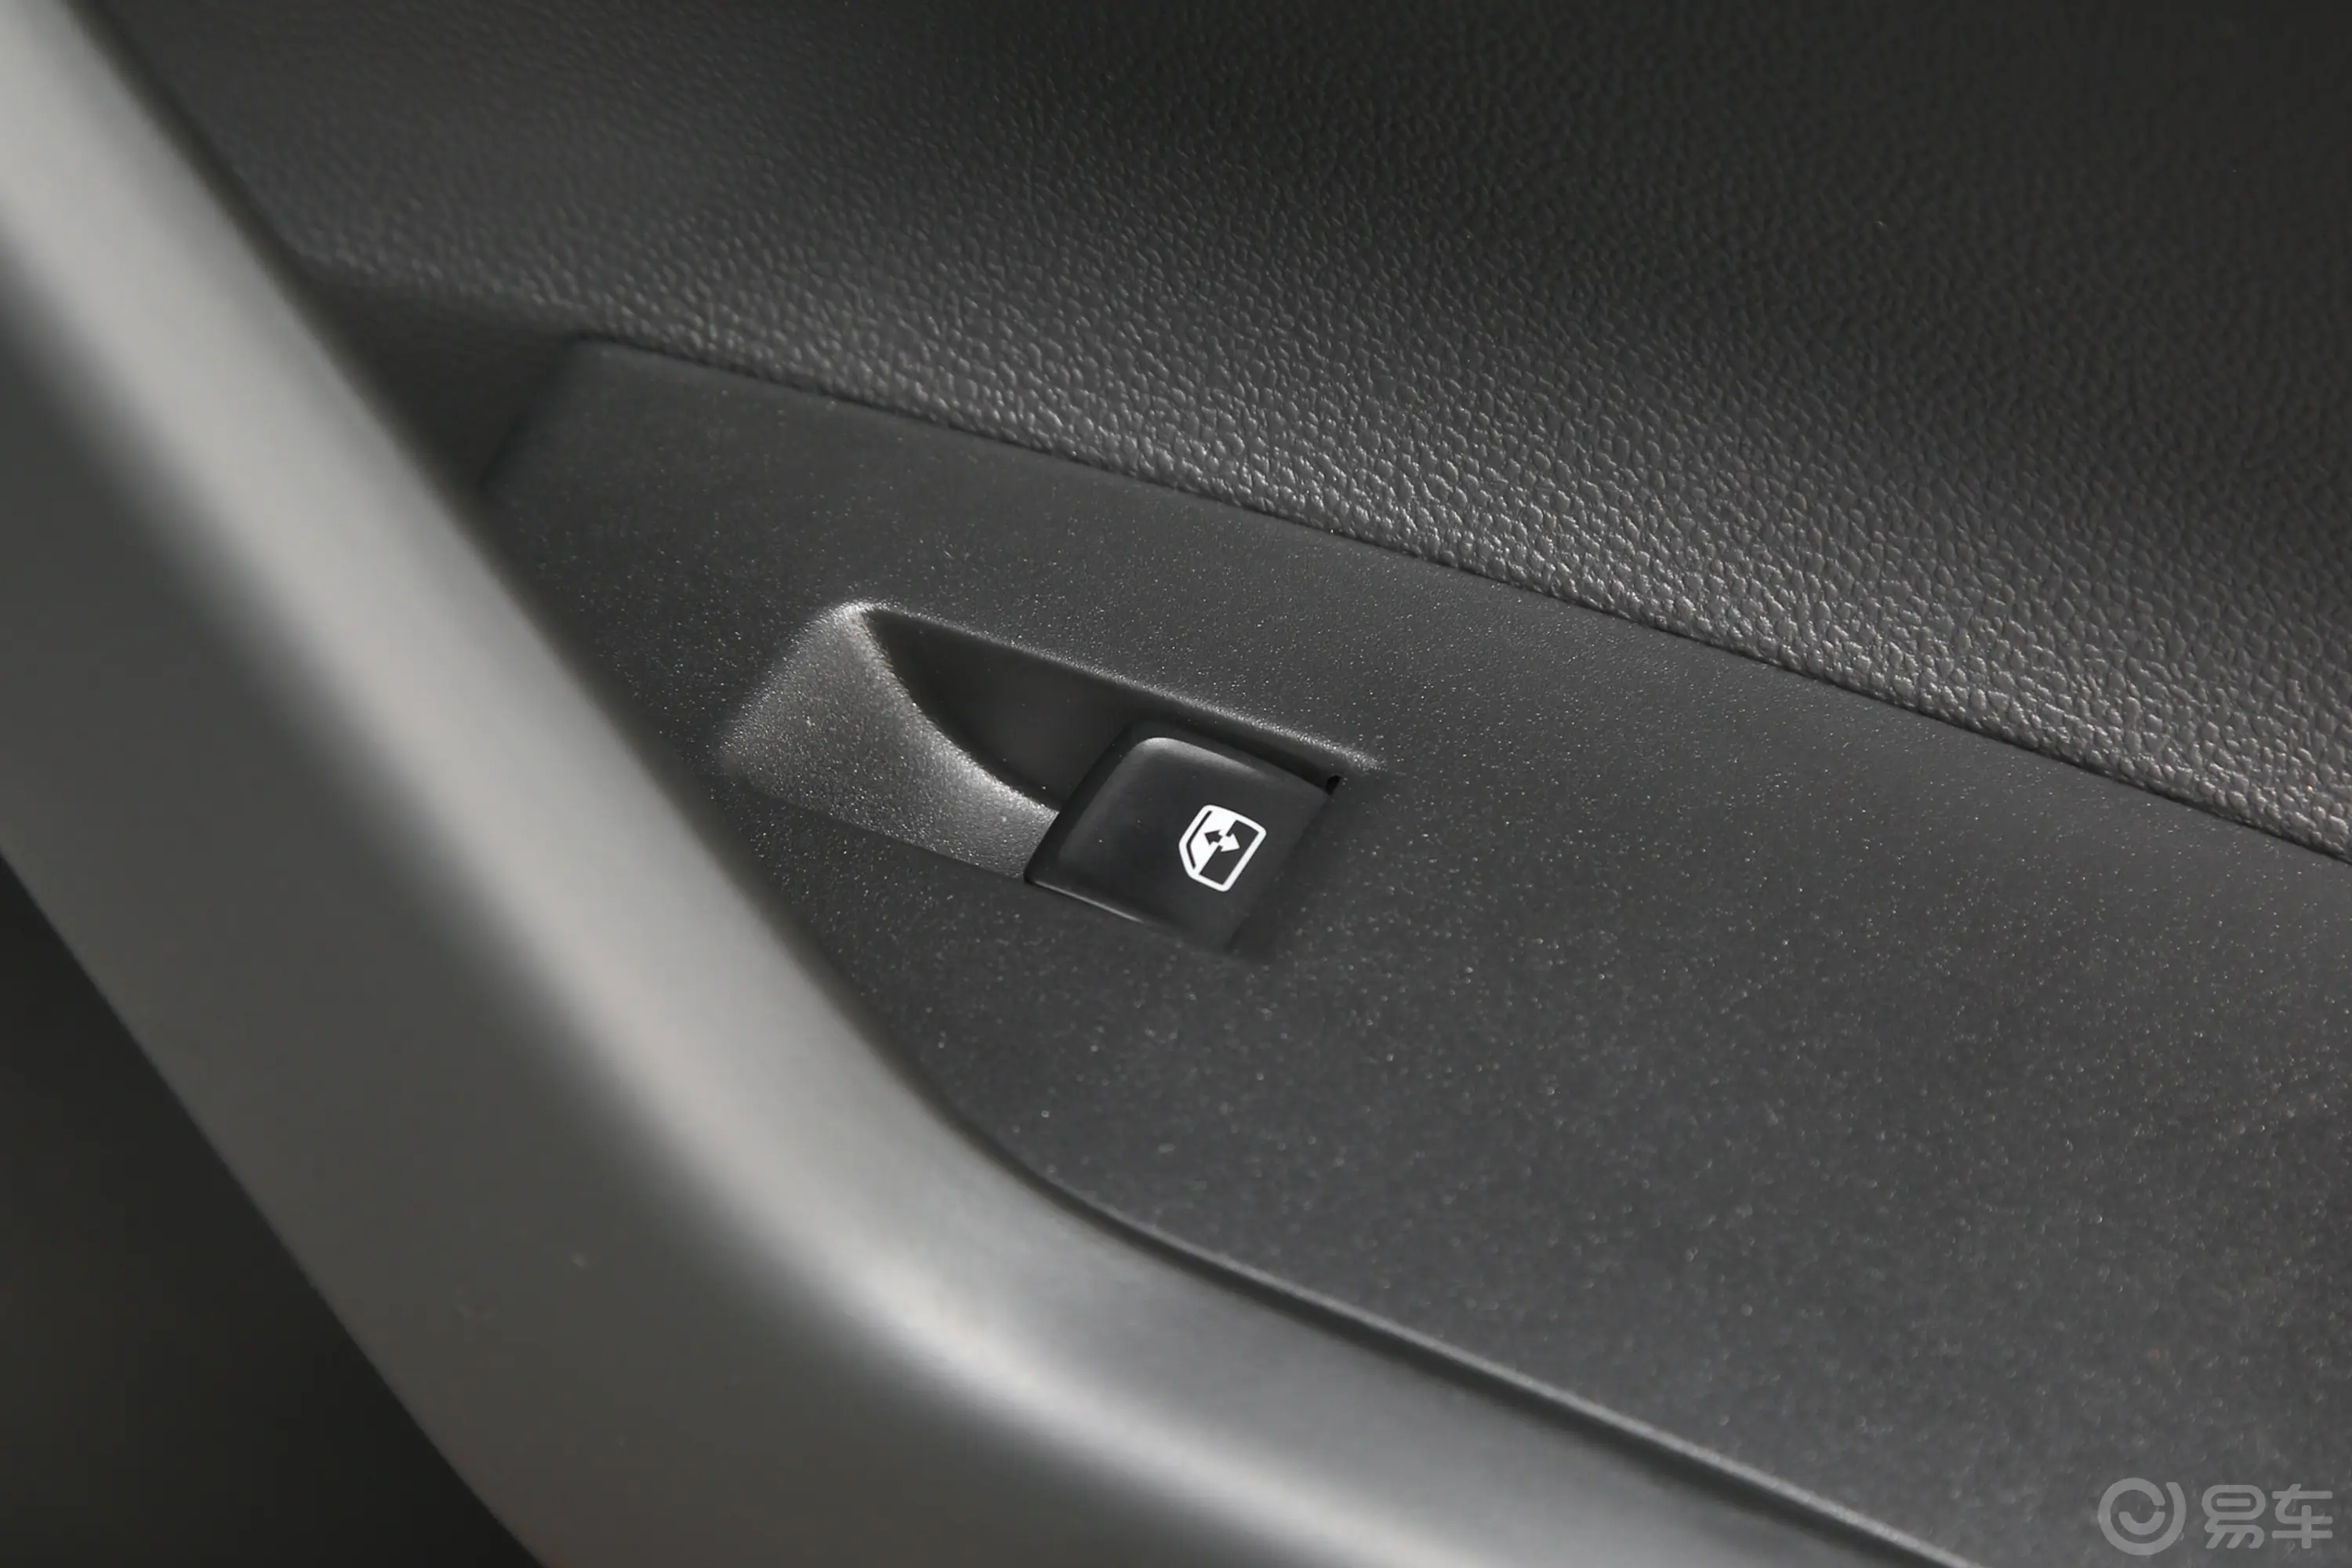 PoloPlus 1.5L 自动纵情乐活版副驾驶位